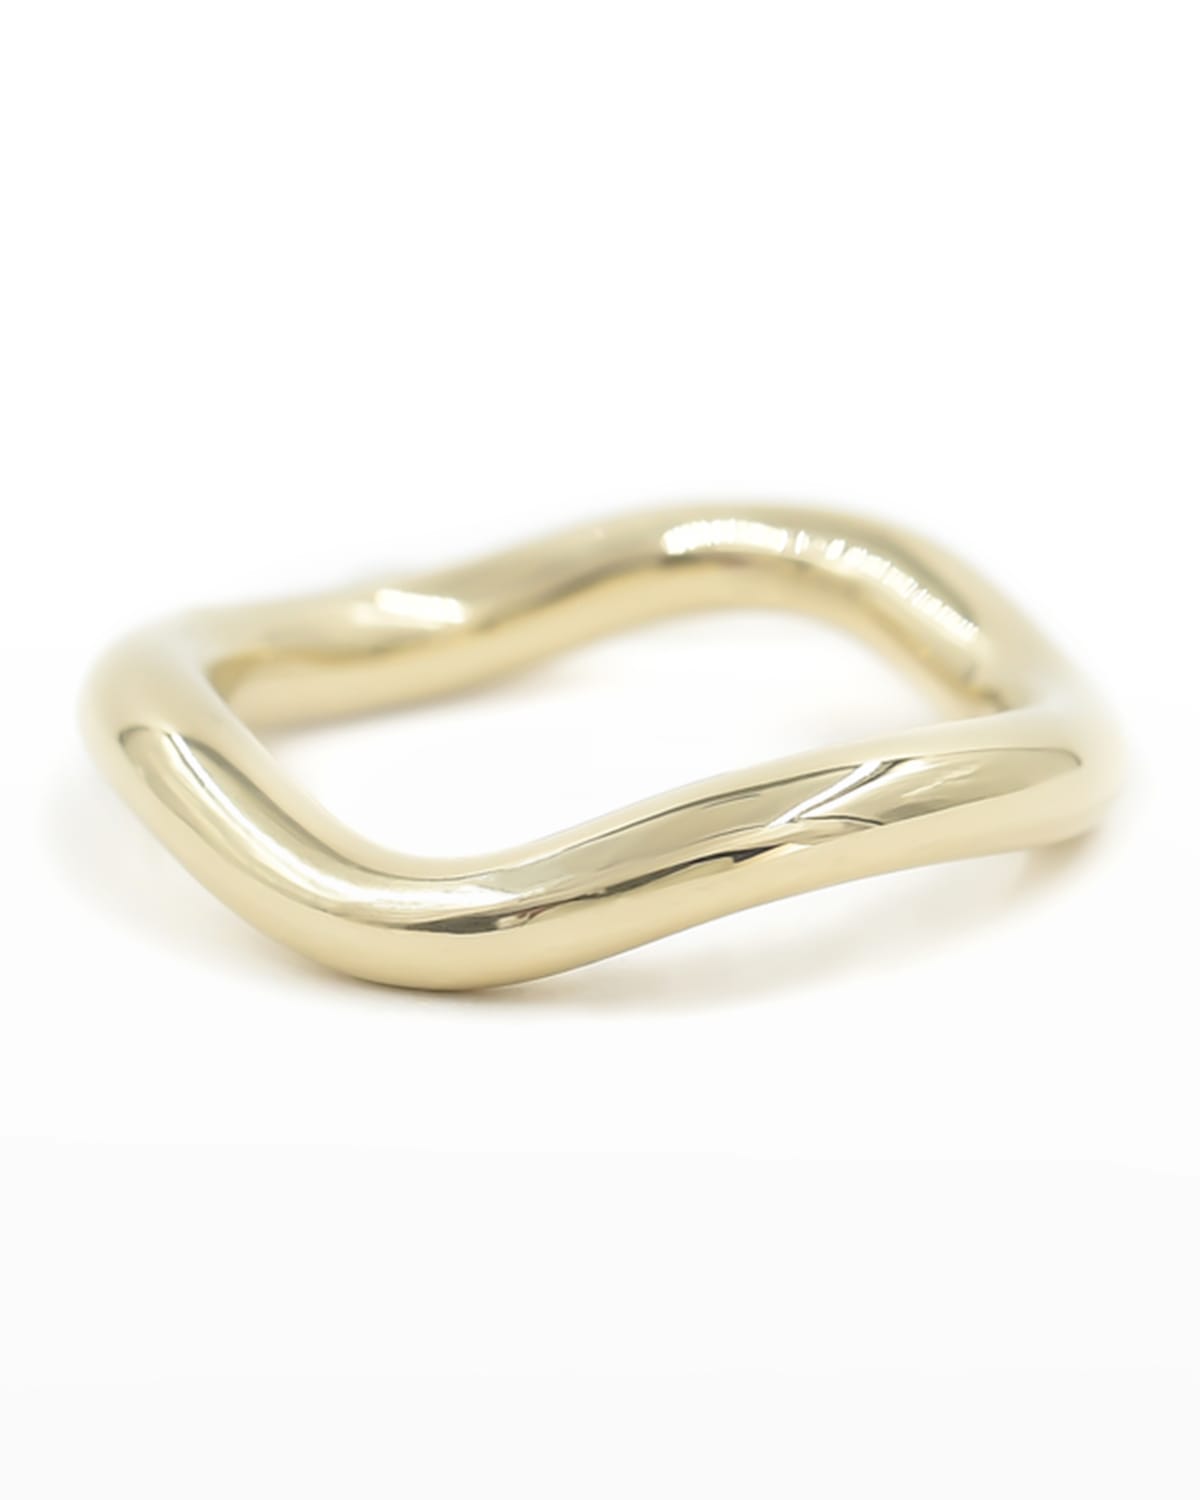 Bondeye Jewelry Popie Wave Ring In Solid 14k Gold